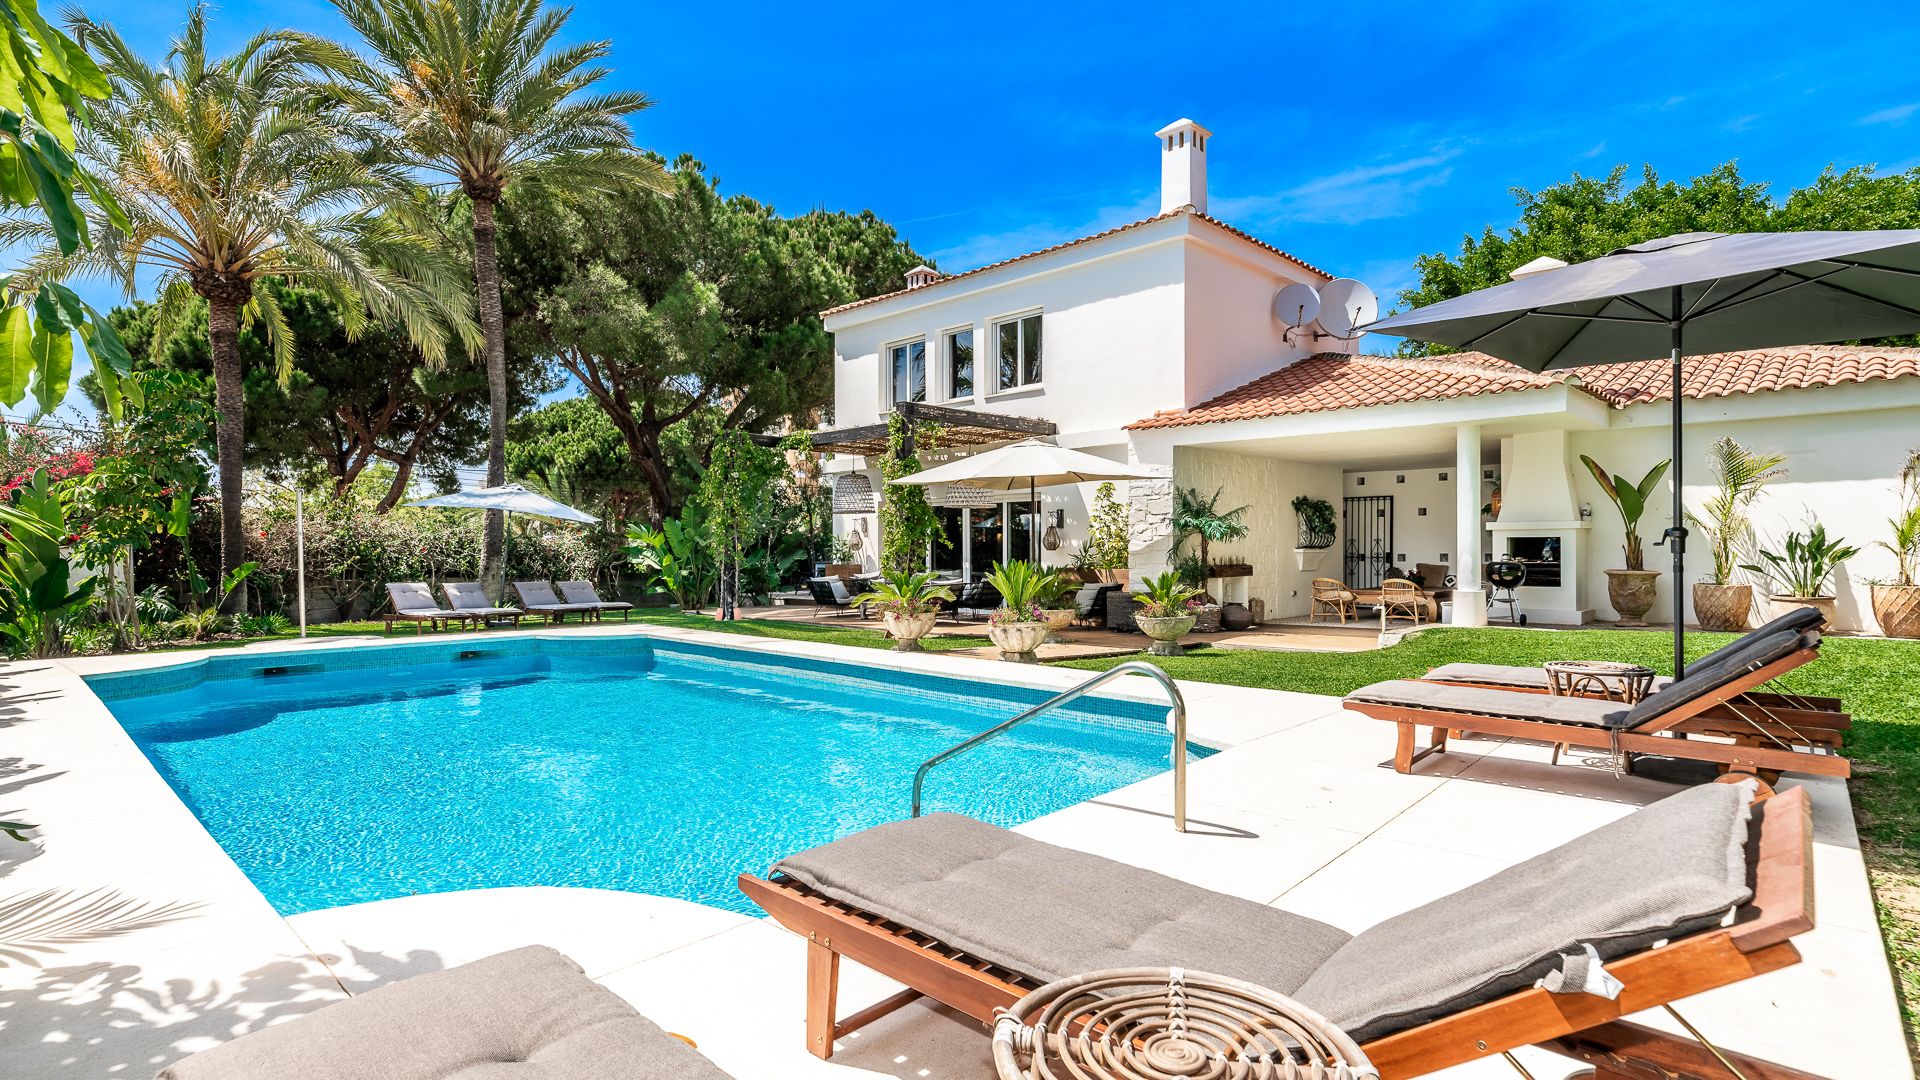 Stunning Villa in Marbella's Exclusive Beachside Urbanization | Engel & Völkers Marbella